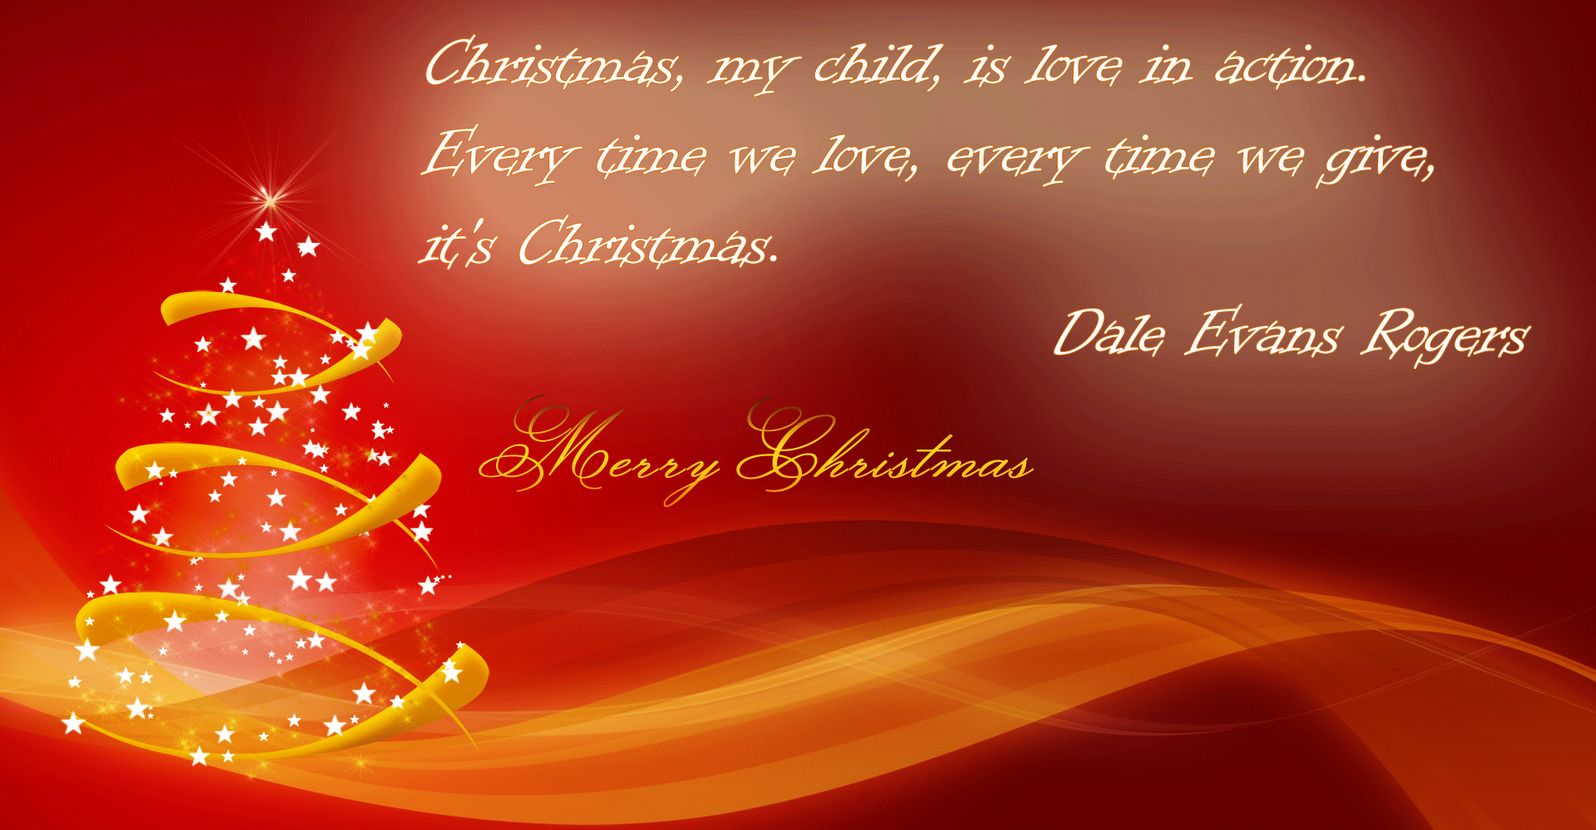 ImagesList.com: Christmas Quotes 6